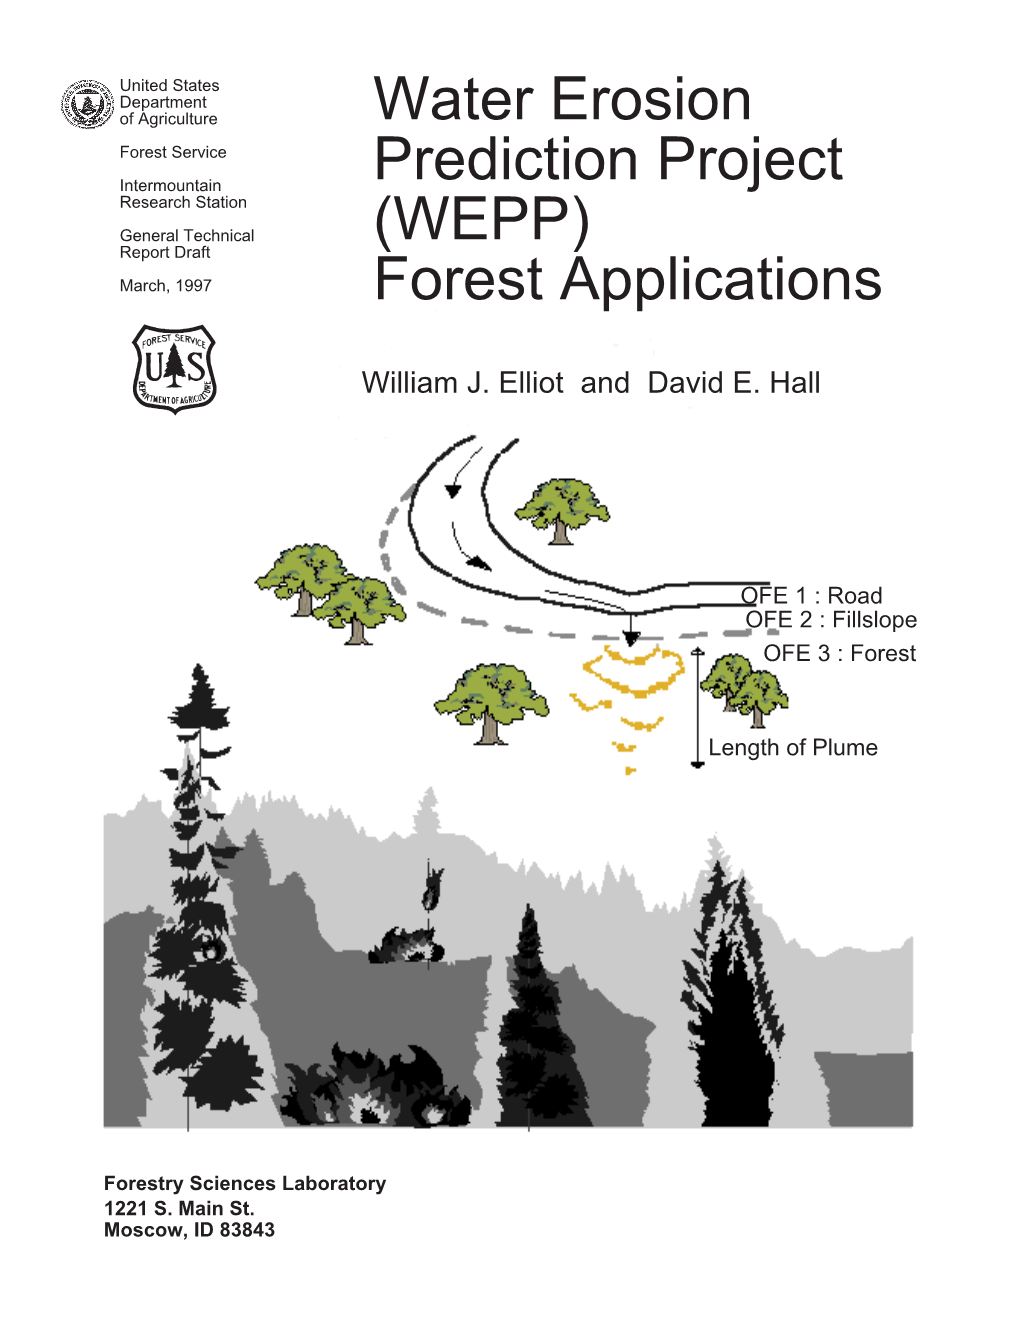 Water Erosion Prediction Project (WEPP) Soil Erosion Model Input File Description